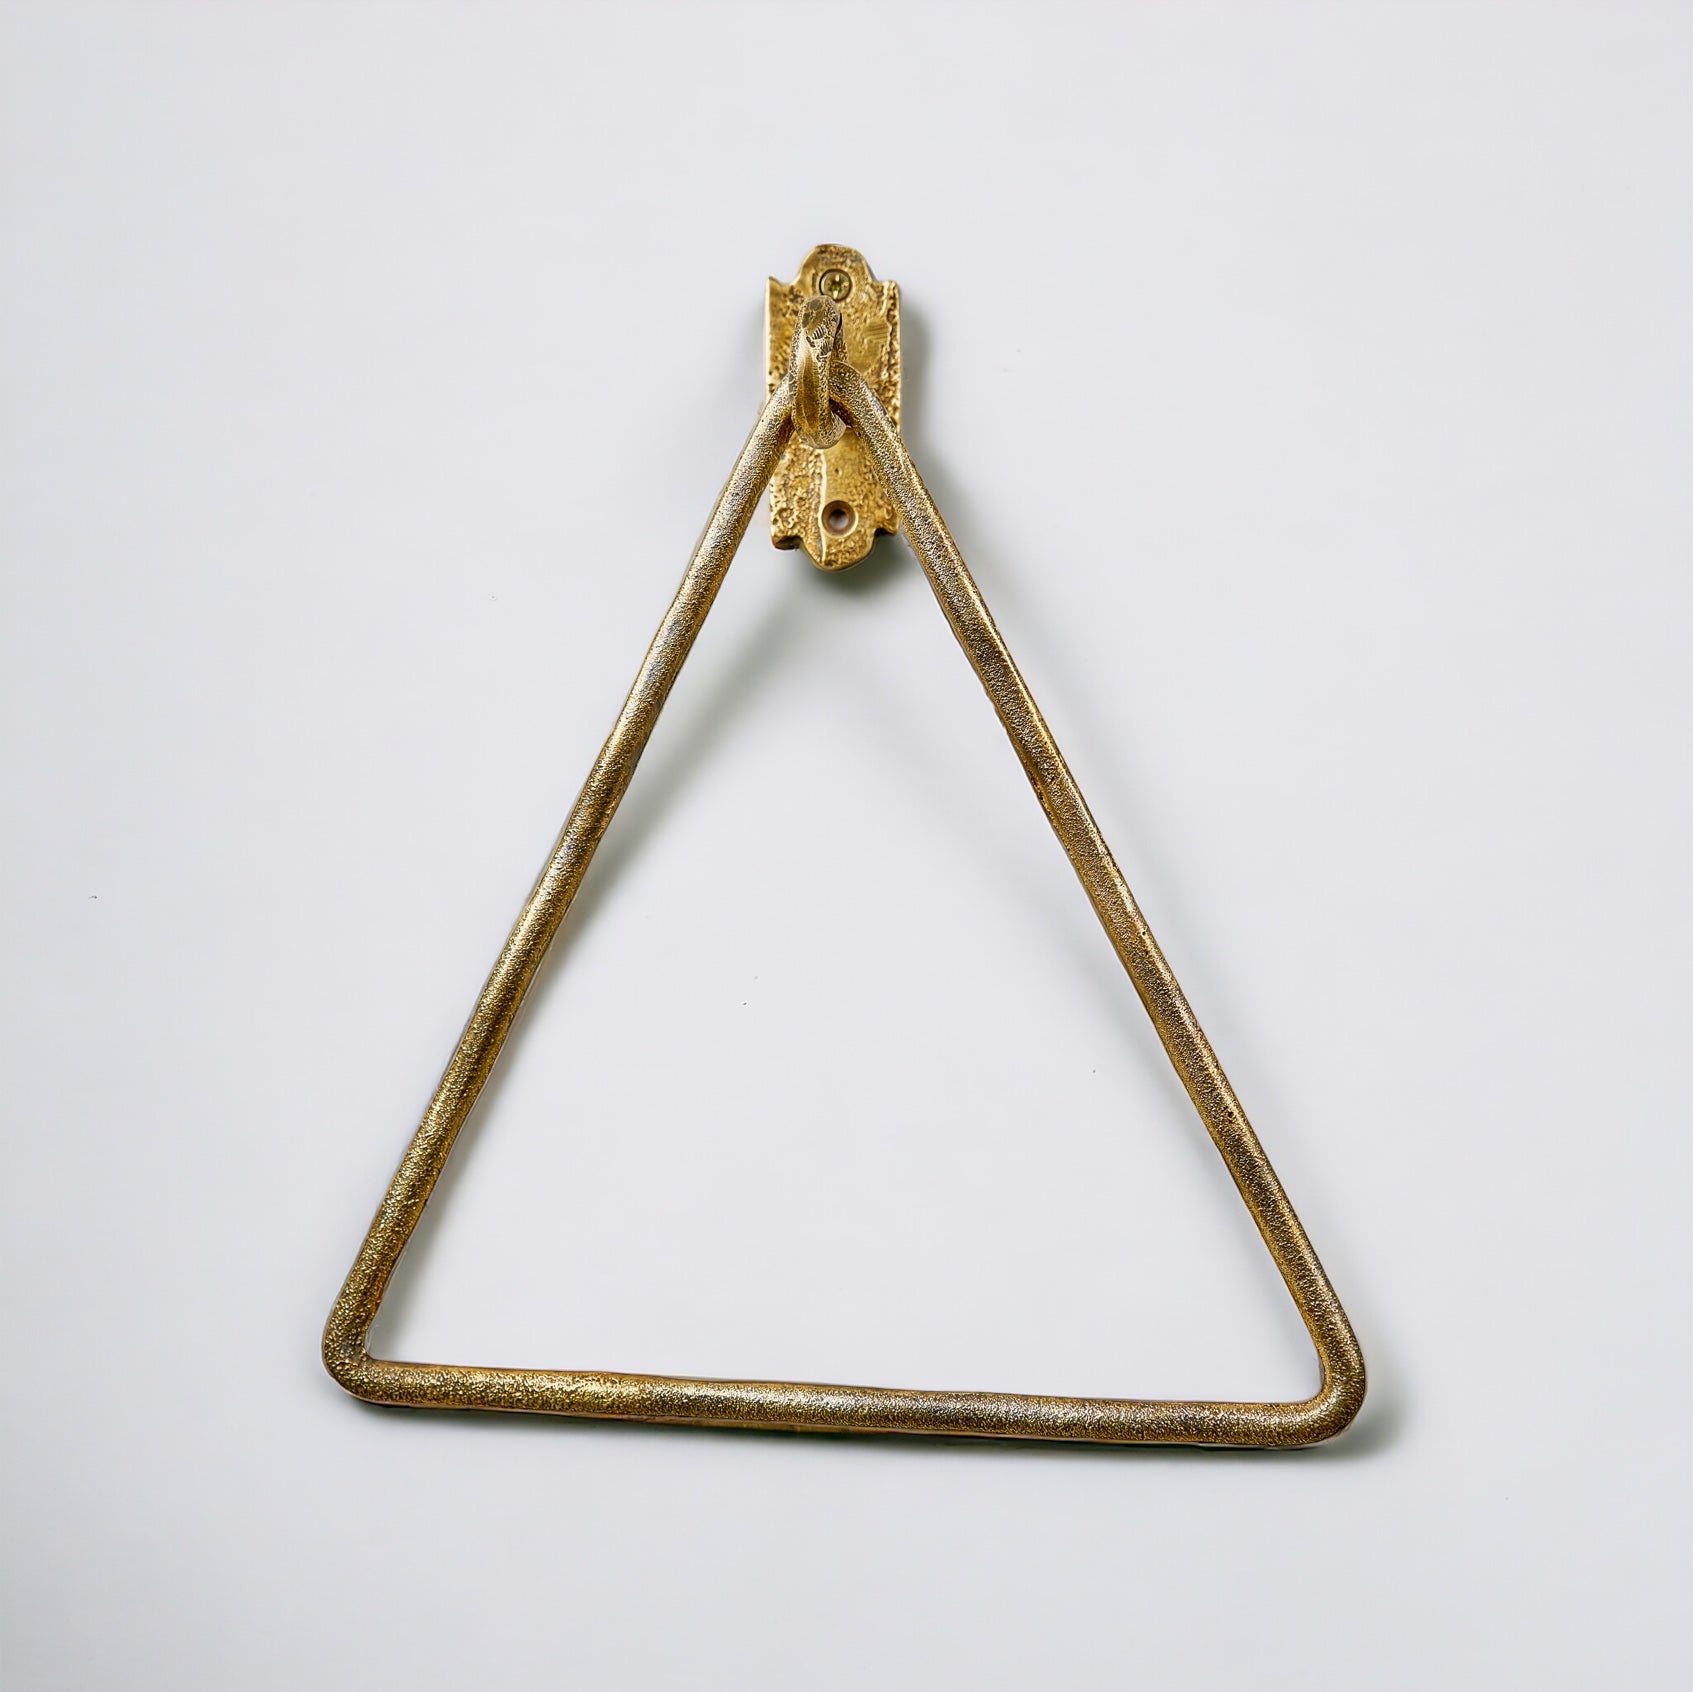 Solid Brass Wall Mounted Triangular Hand Towel Holder For Bathroom - Zayian